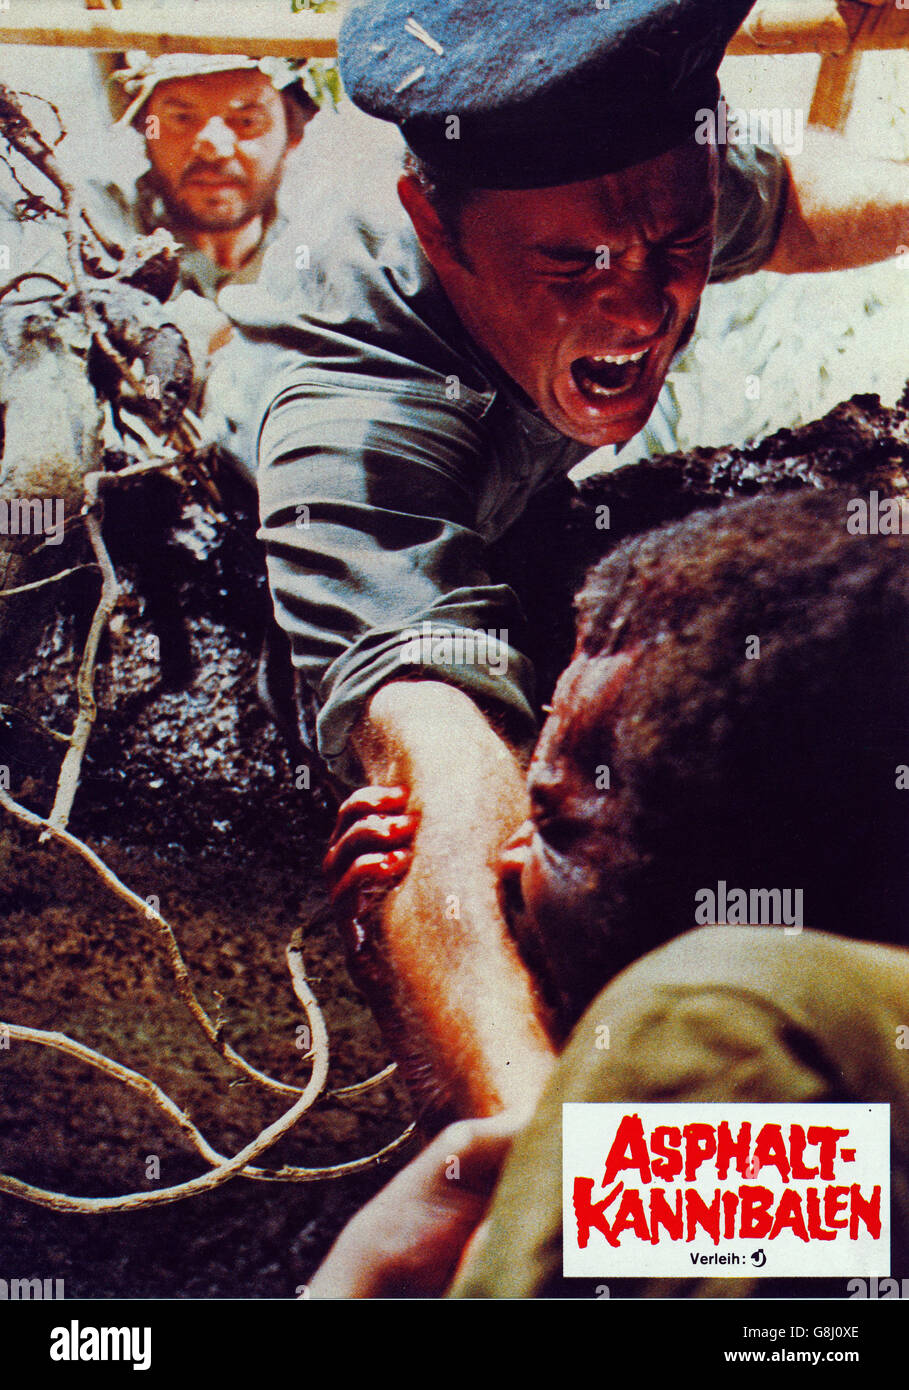 Apocalypse domani, aka: Cannibal Apocalypse, aka: asfalto Kannibalen, Italien/Spanien 1979, Regie: Antonio Margheriti, Darsteller: John Saxon Foto Stock